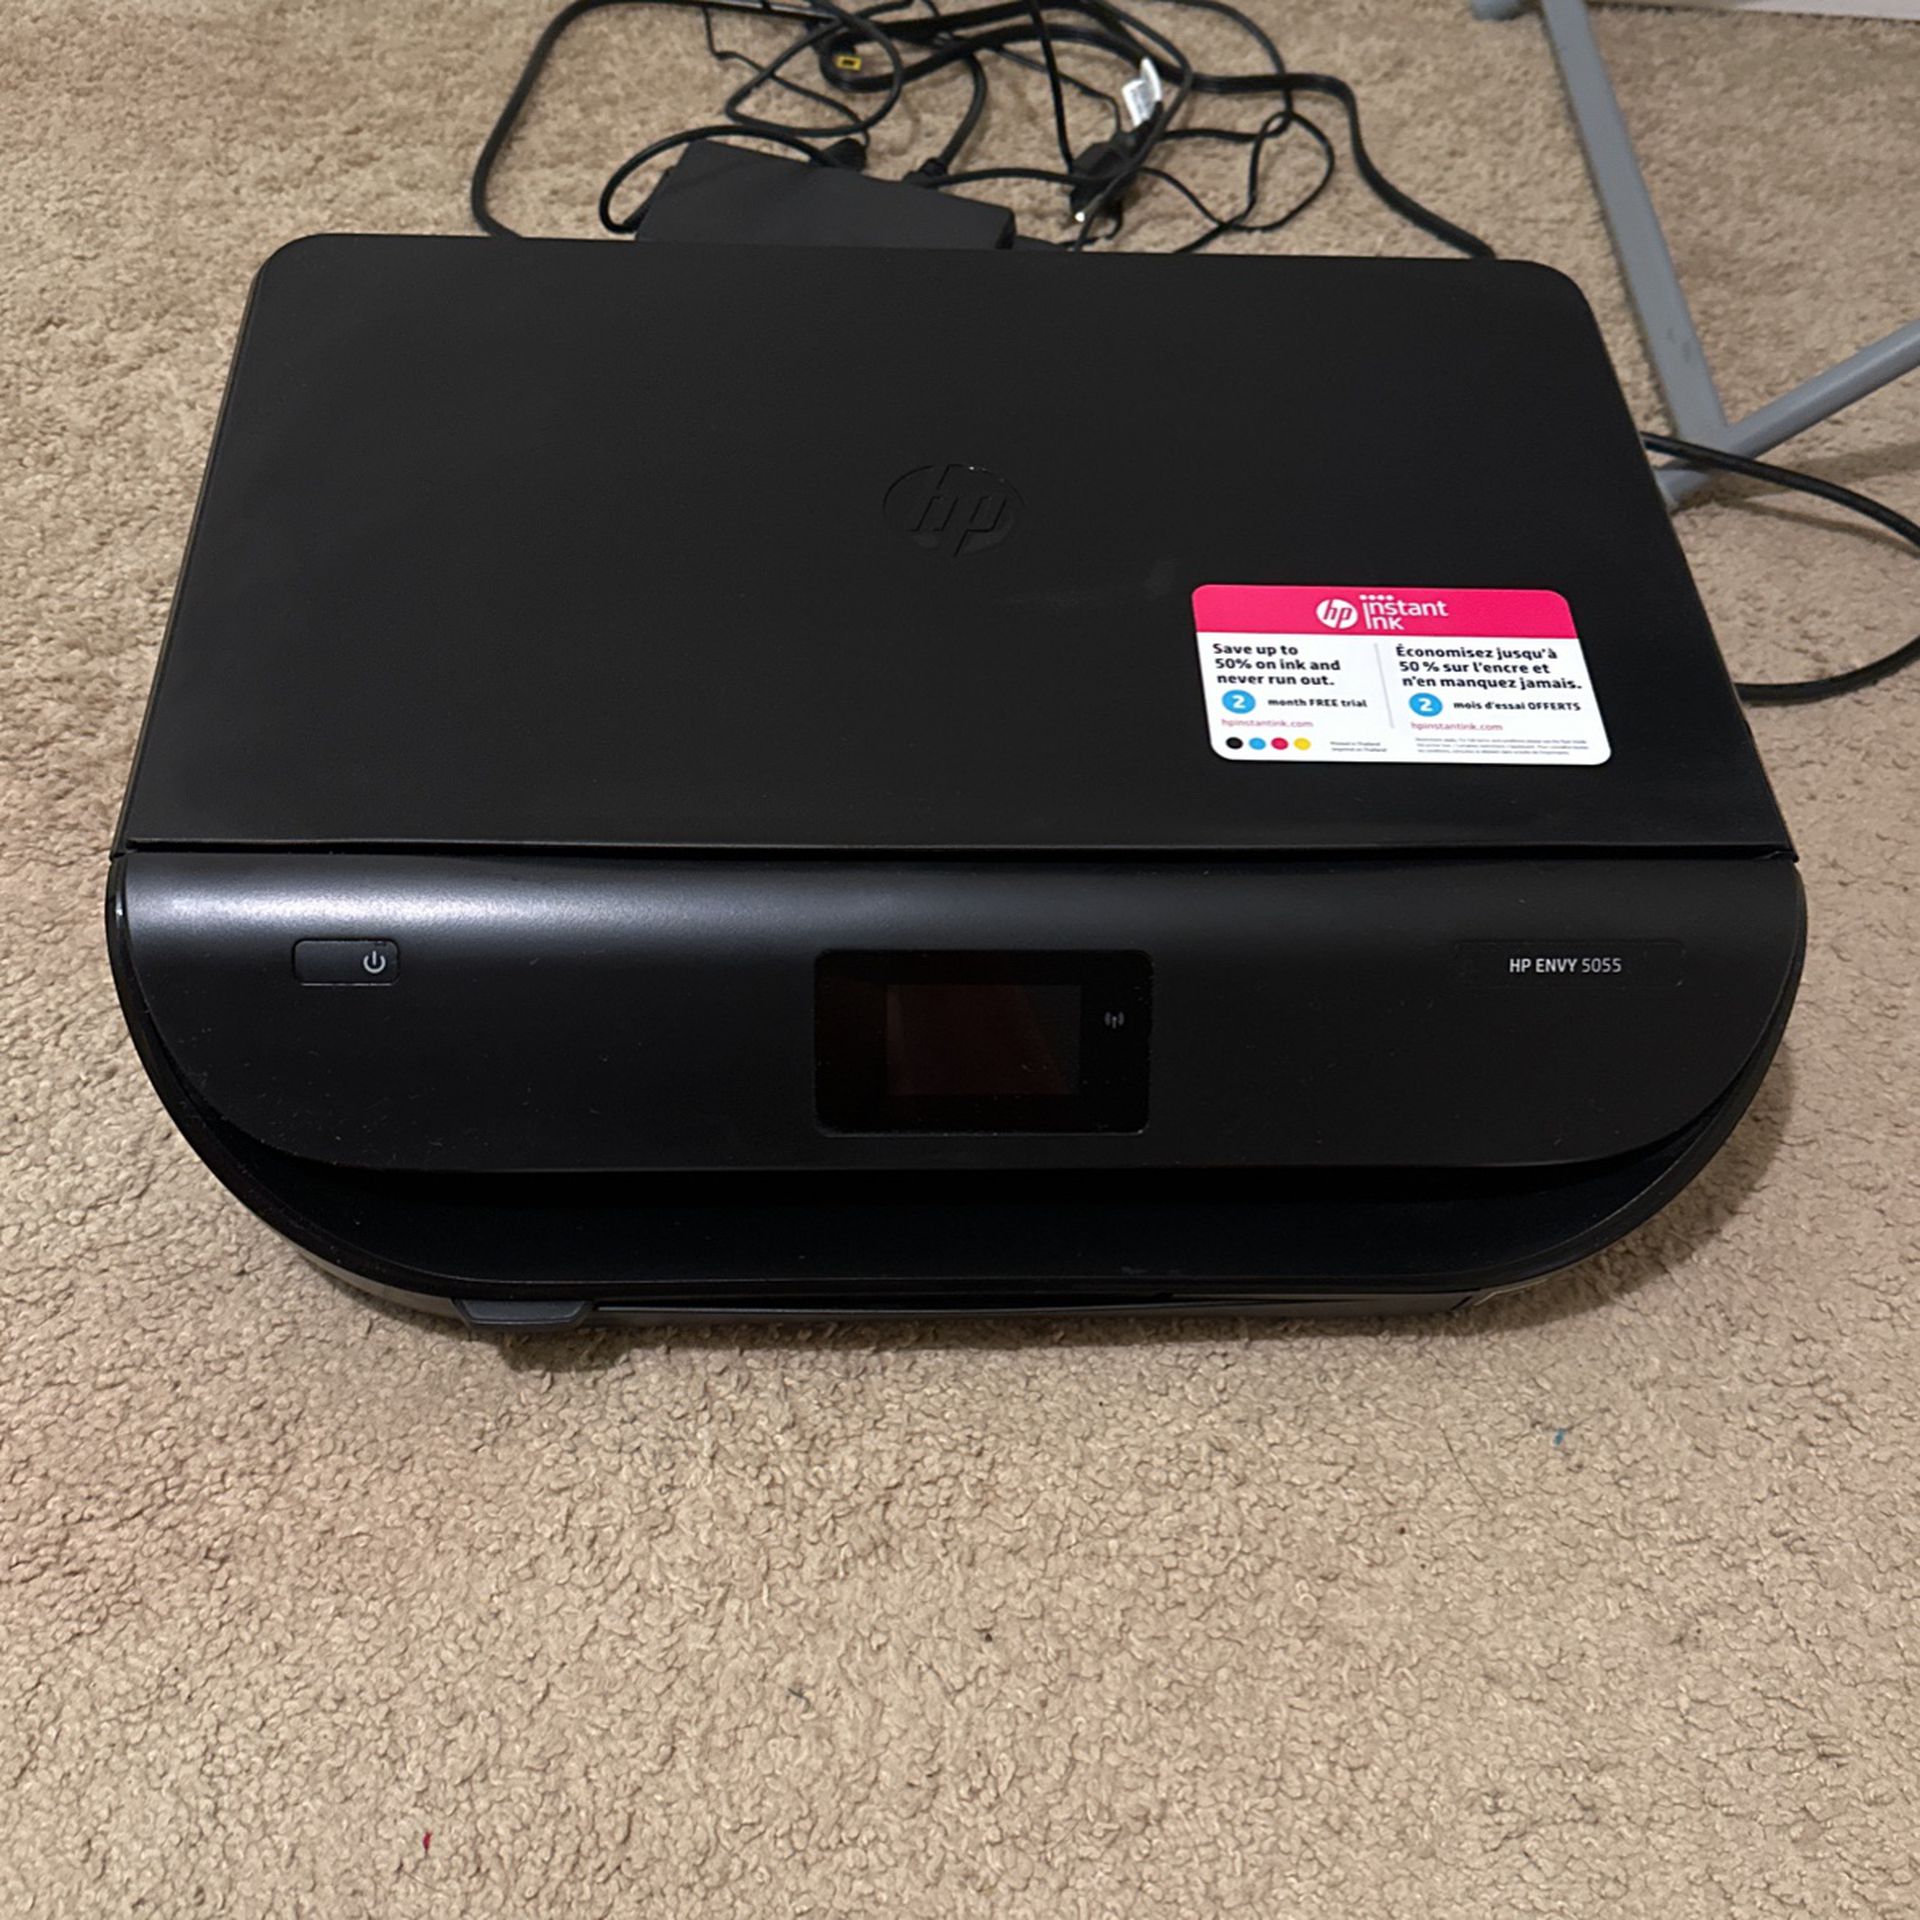 HP Envy 5055 Printer Scanner And Copier